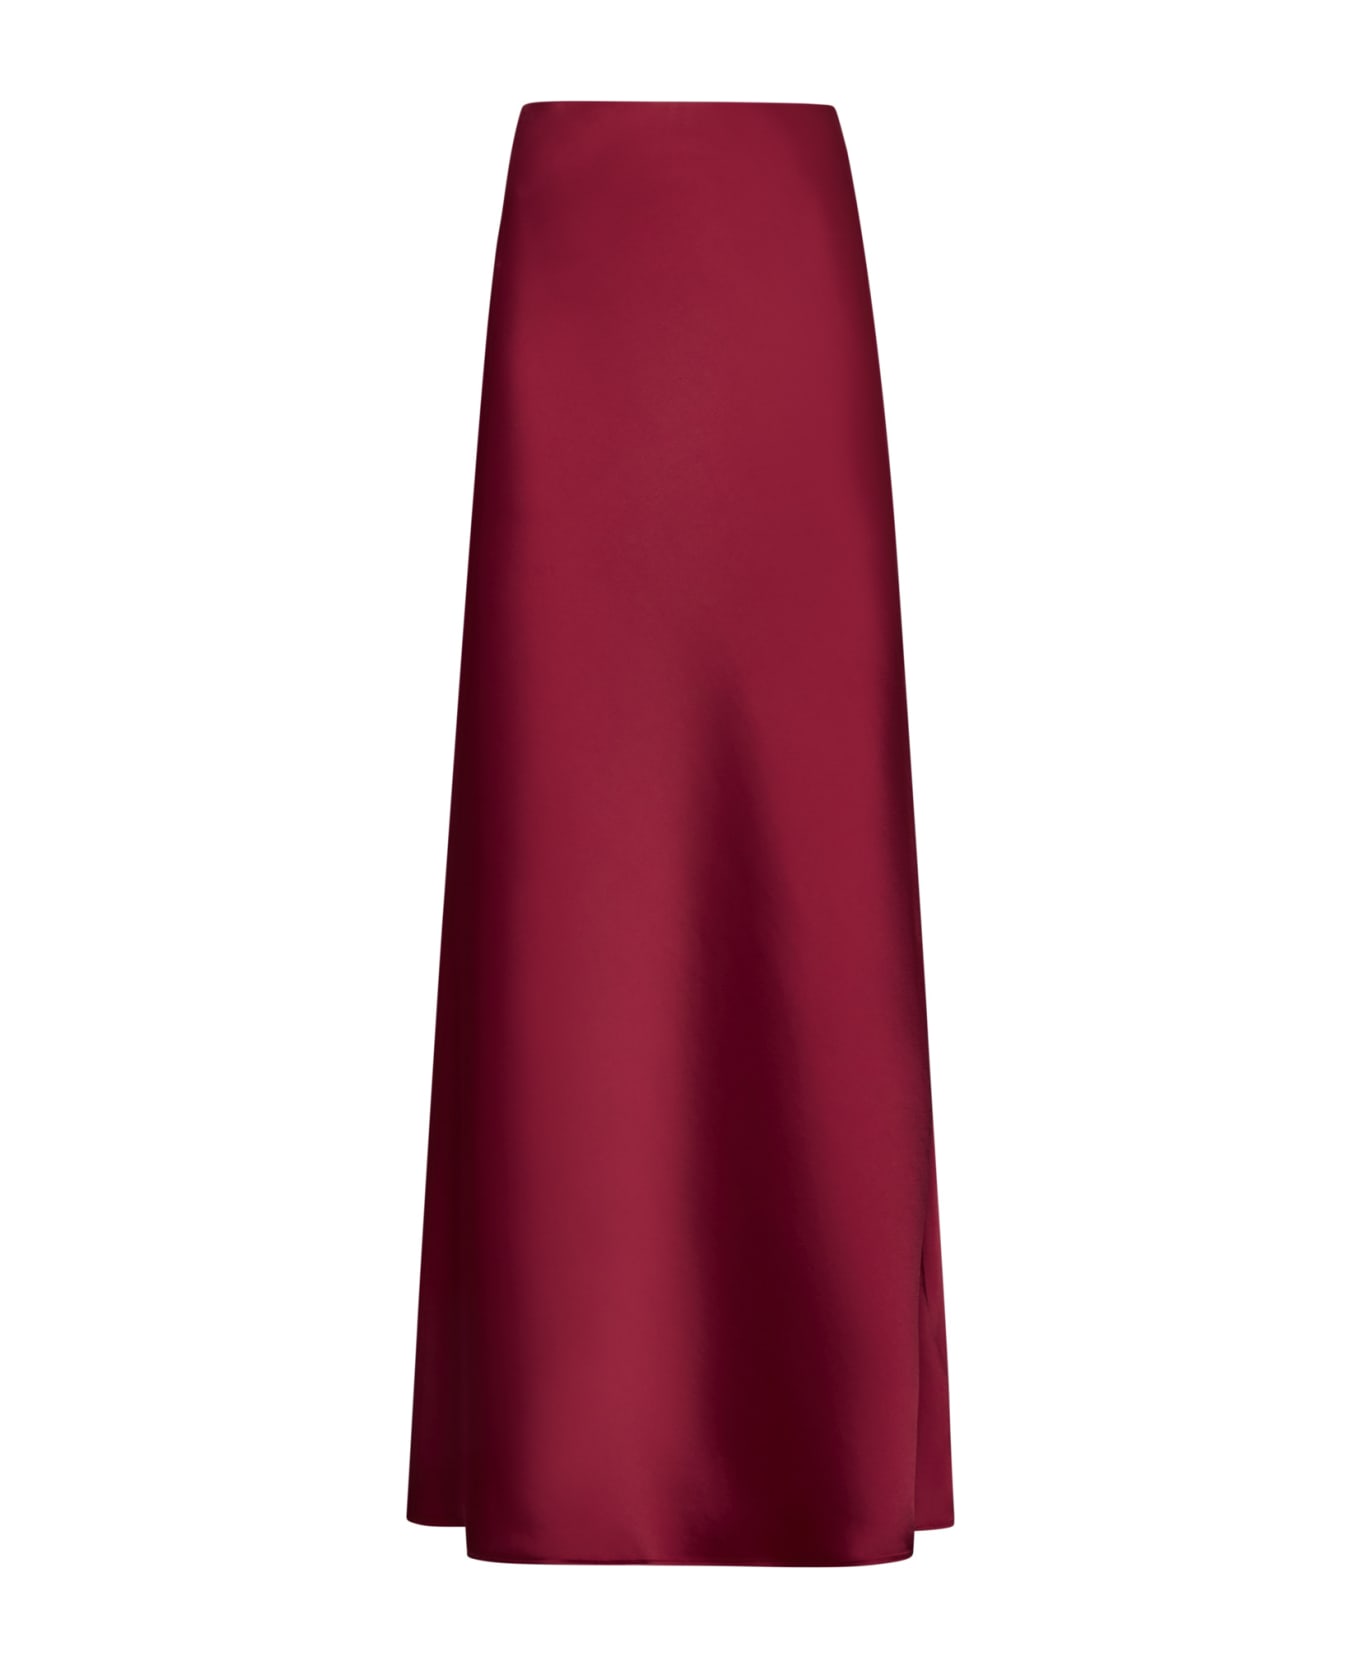 Blanca Vita Skirt - Bordeaux